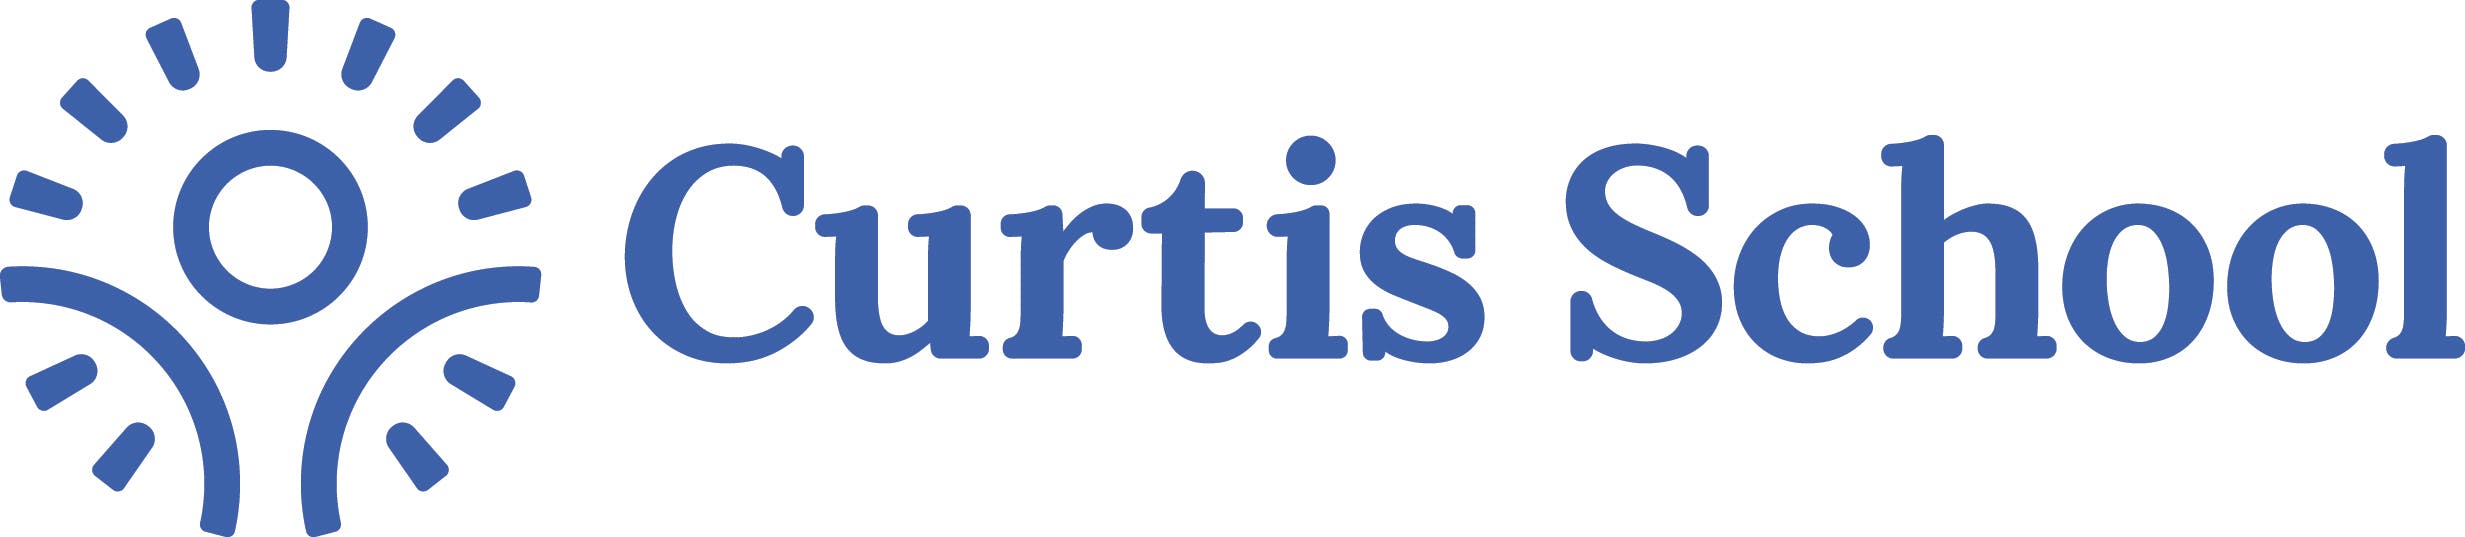 Curtis School logo